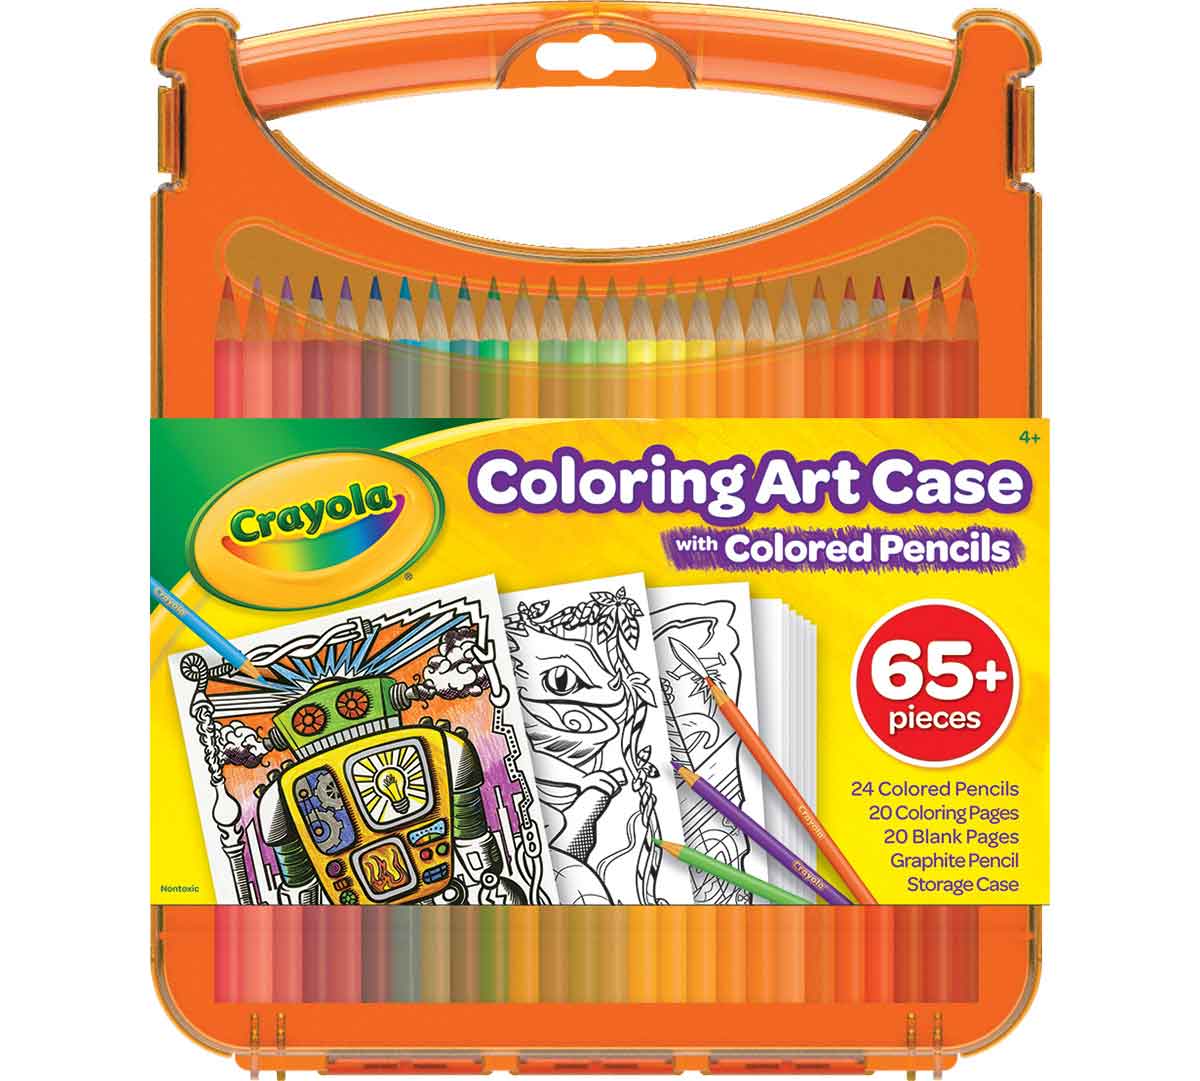 https://shop.crayola.com/on/demandware.static/-/Sites-crayola-storefront/default/dw10c3b073/images/04-0376-0-301_Coloring-Art-Case_Colored-Pencils_F-R.jpg